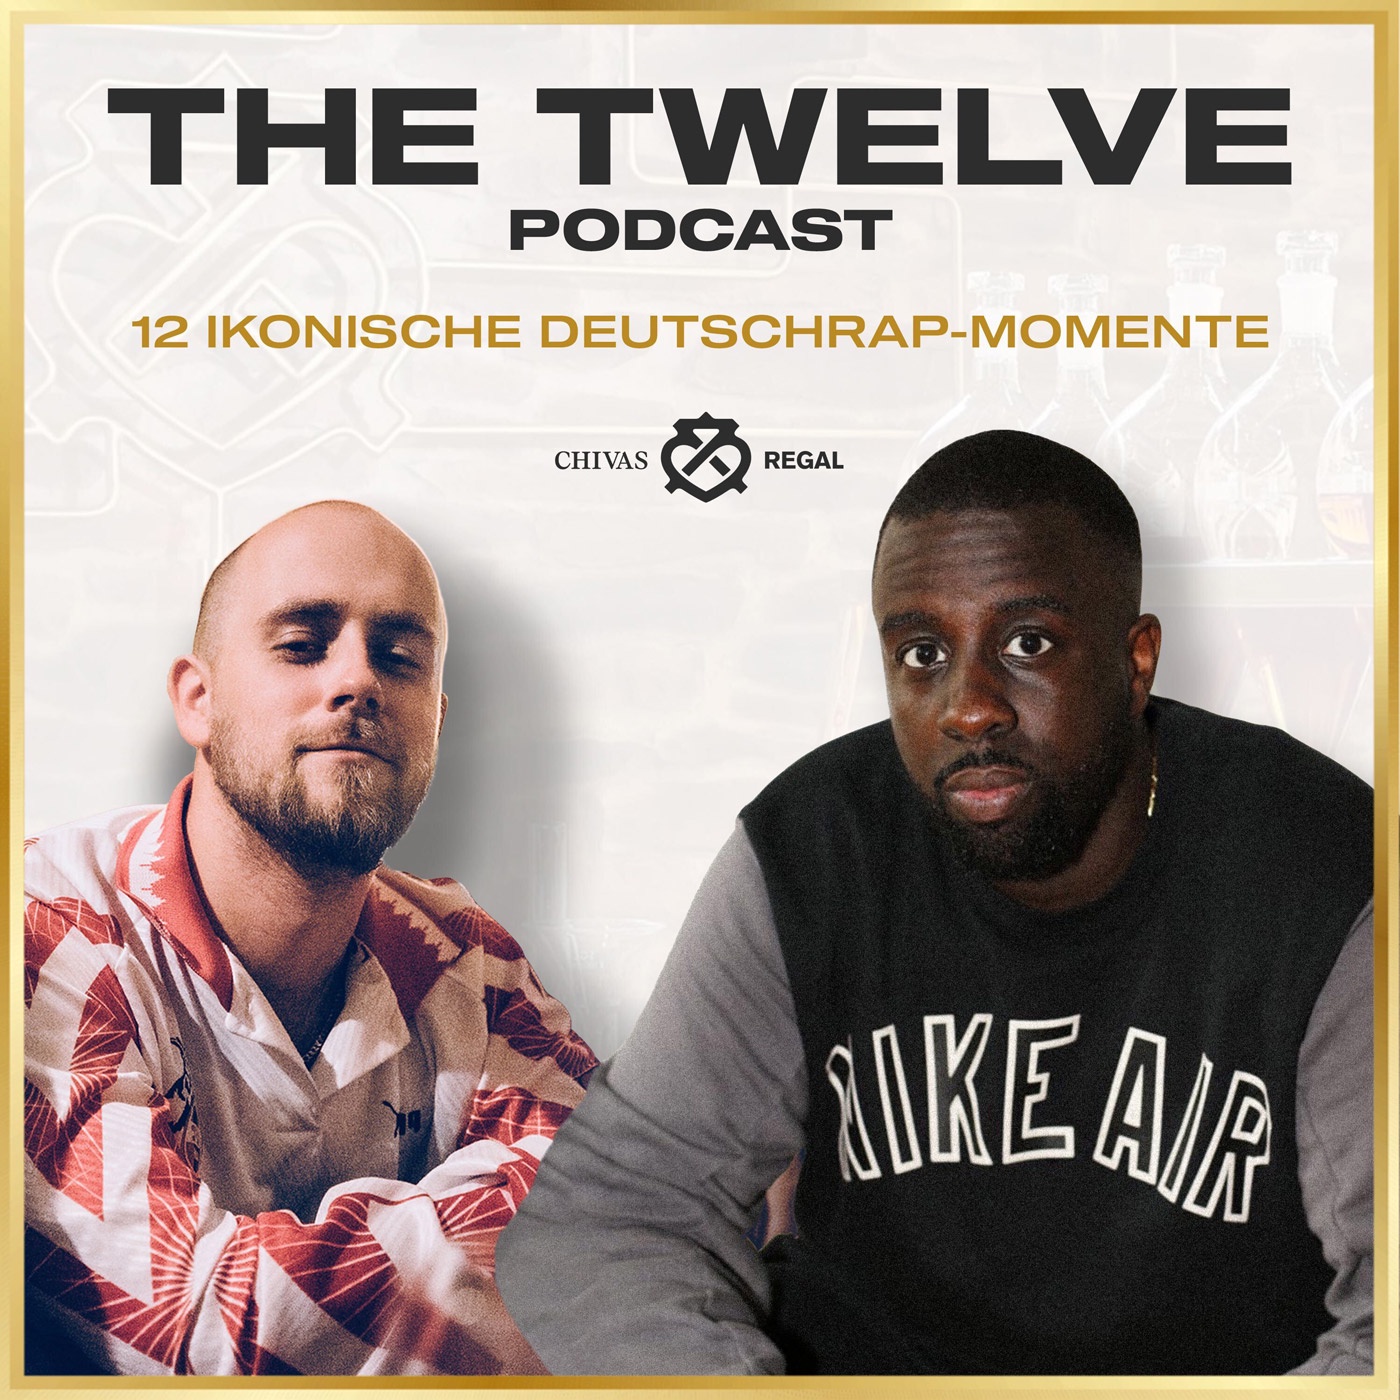 THE TWELVE Podcast